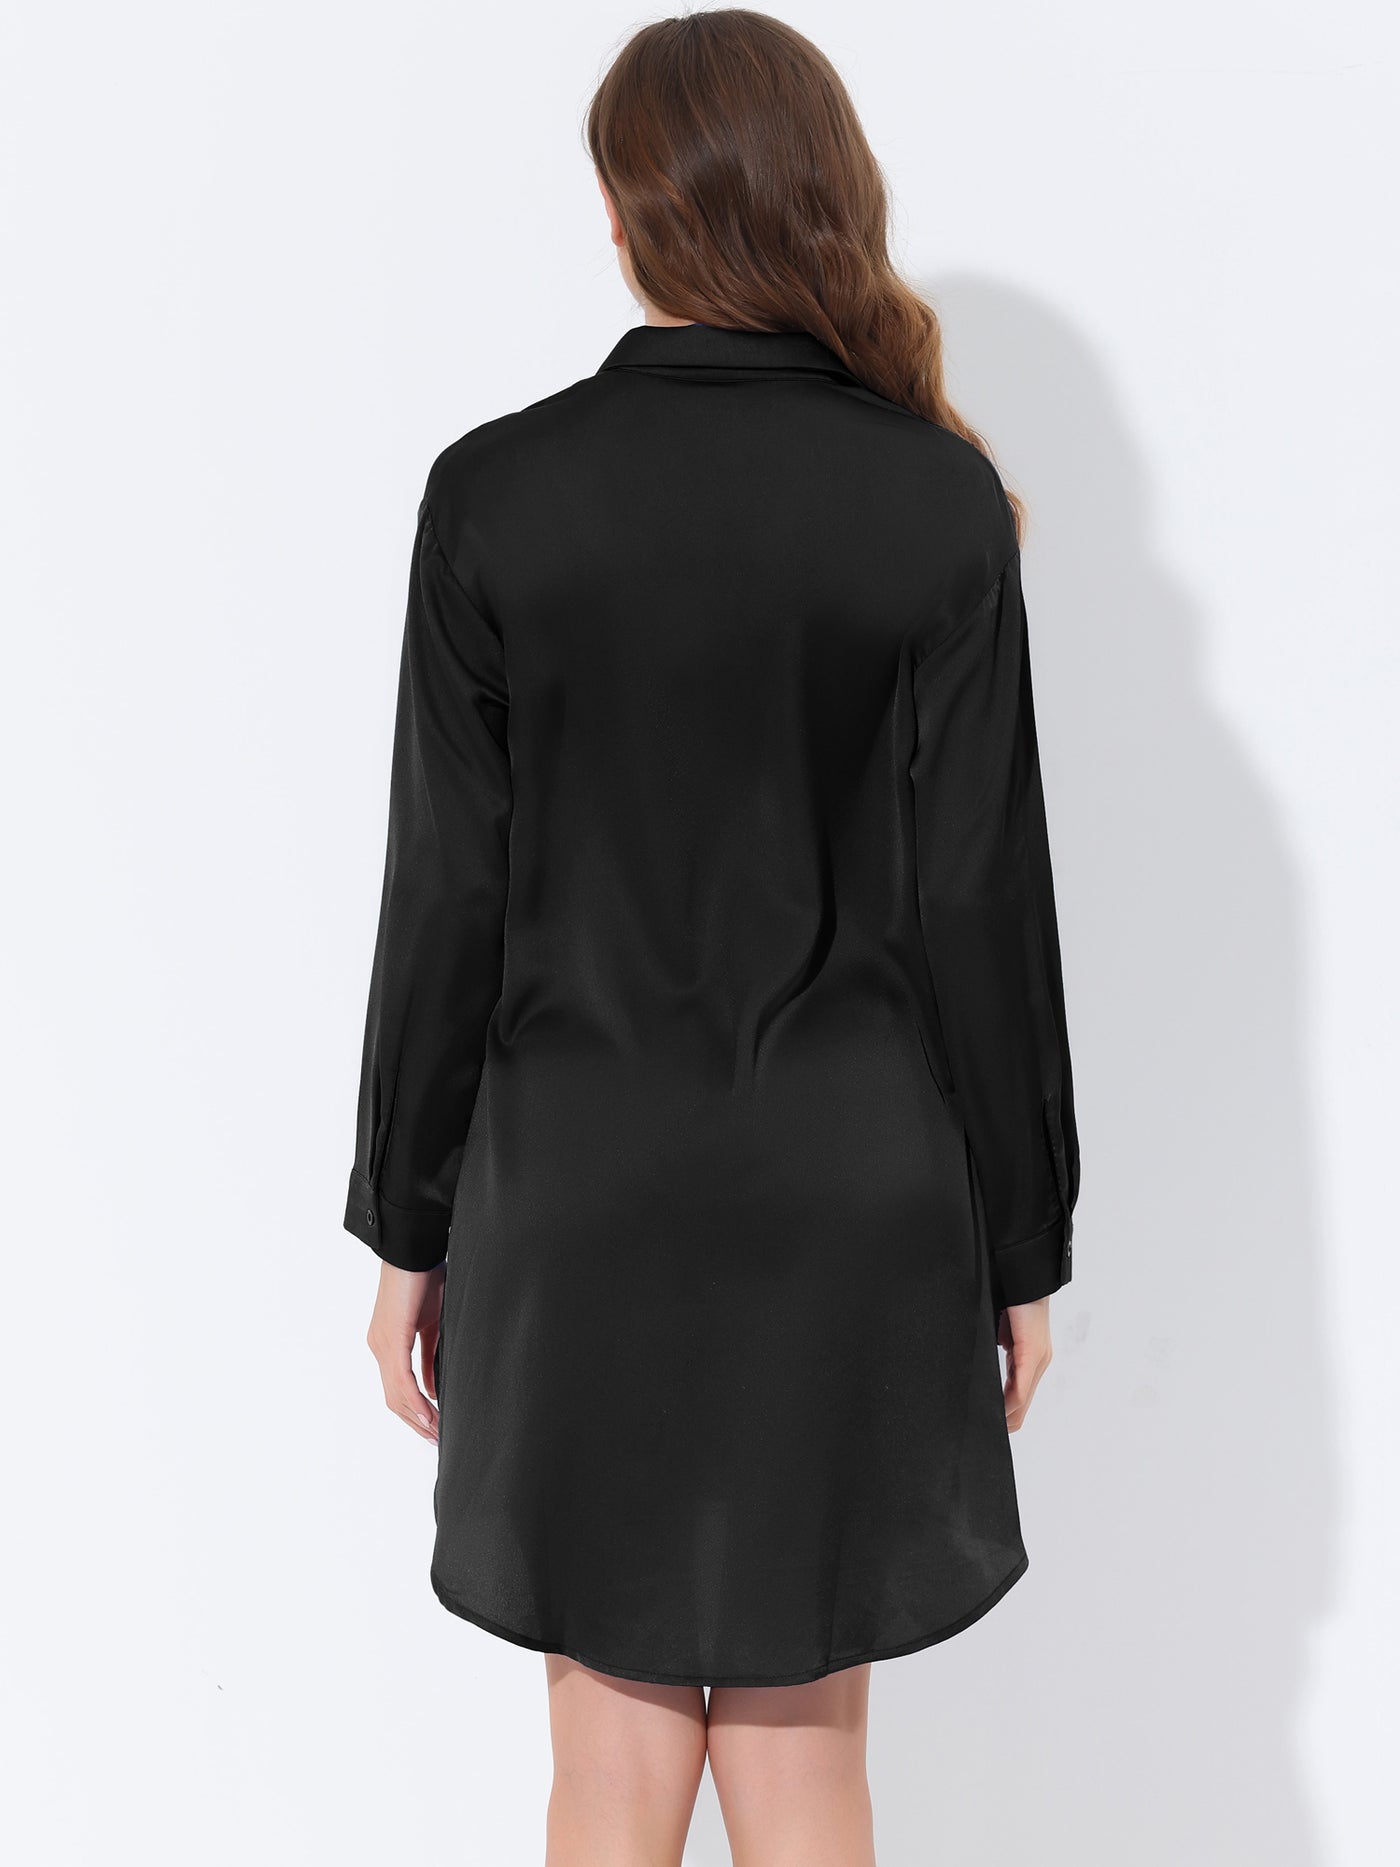 Bublédon Women's Long Sleeves Button Down Shirt Dress Satin Nightgown